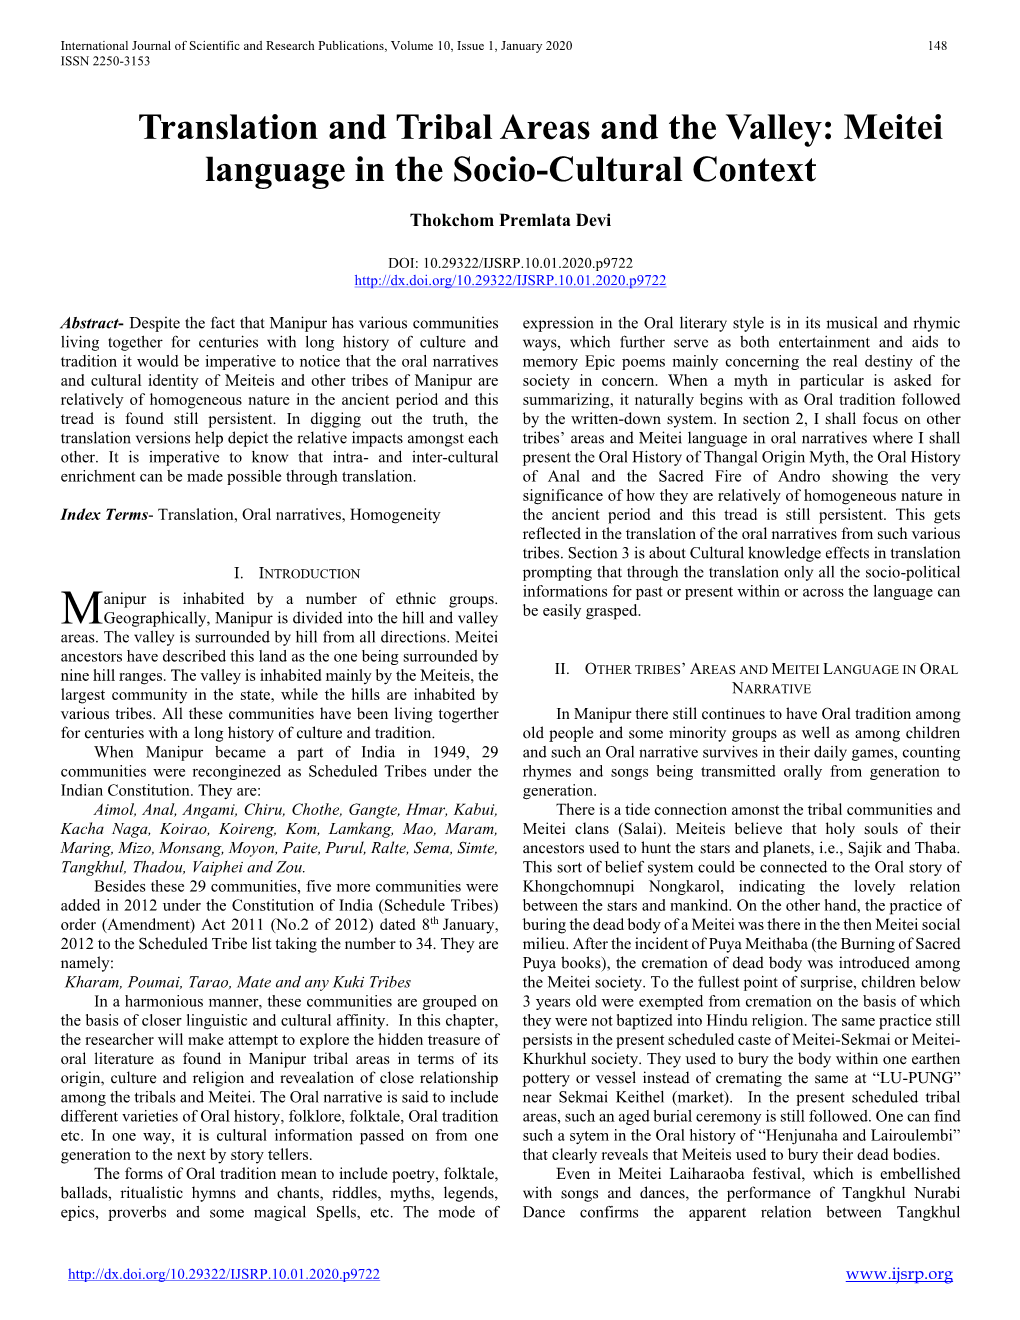 Meitei Language in the Socio-Cultural Context